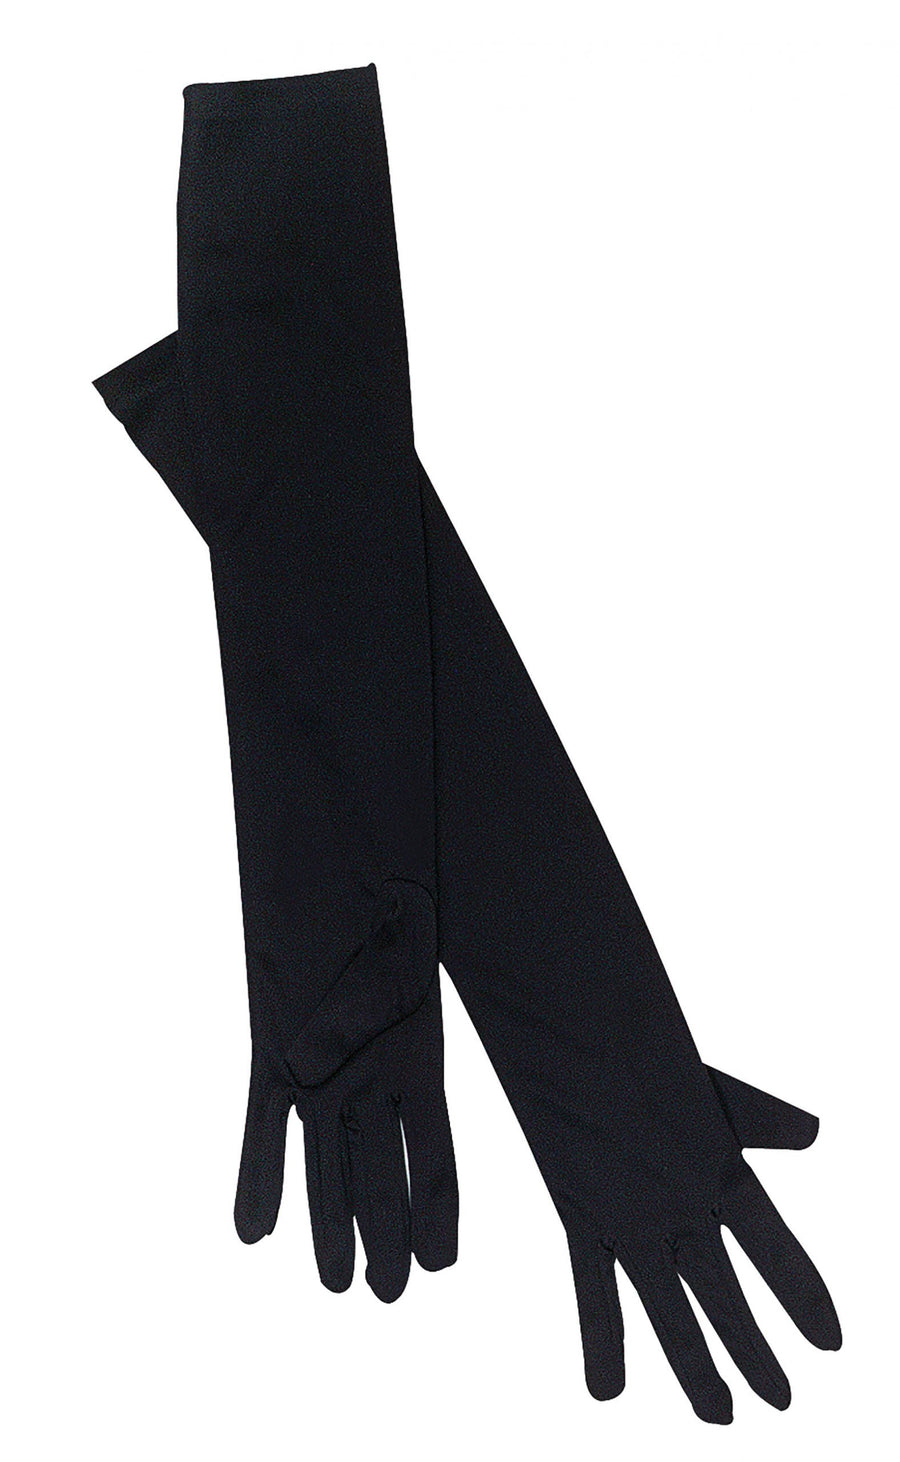 Long Black Gloves Opera 50cm Costume Accessory_1